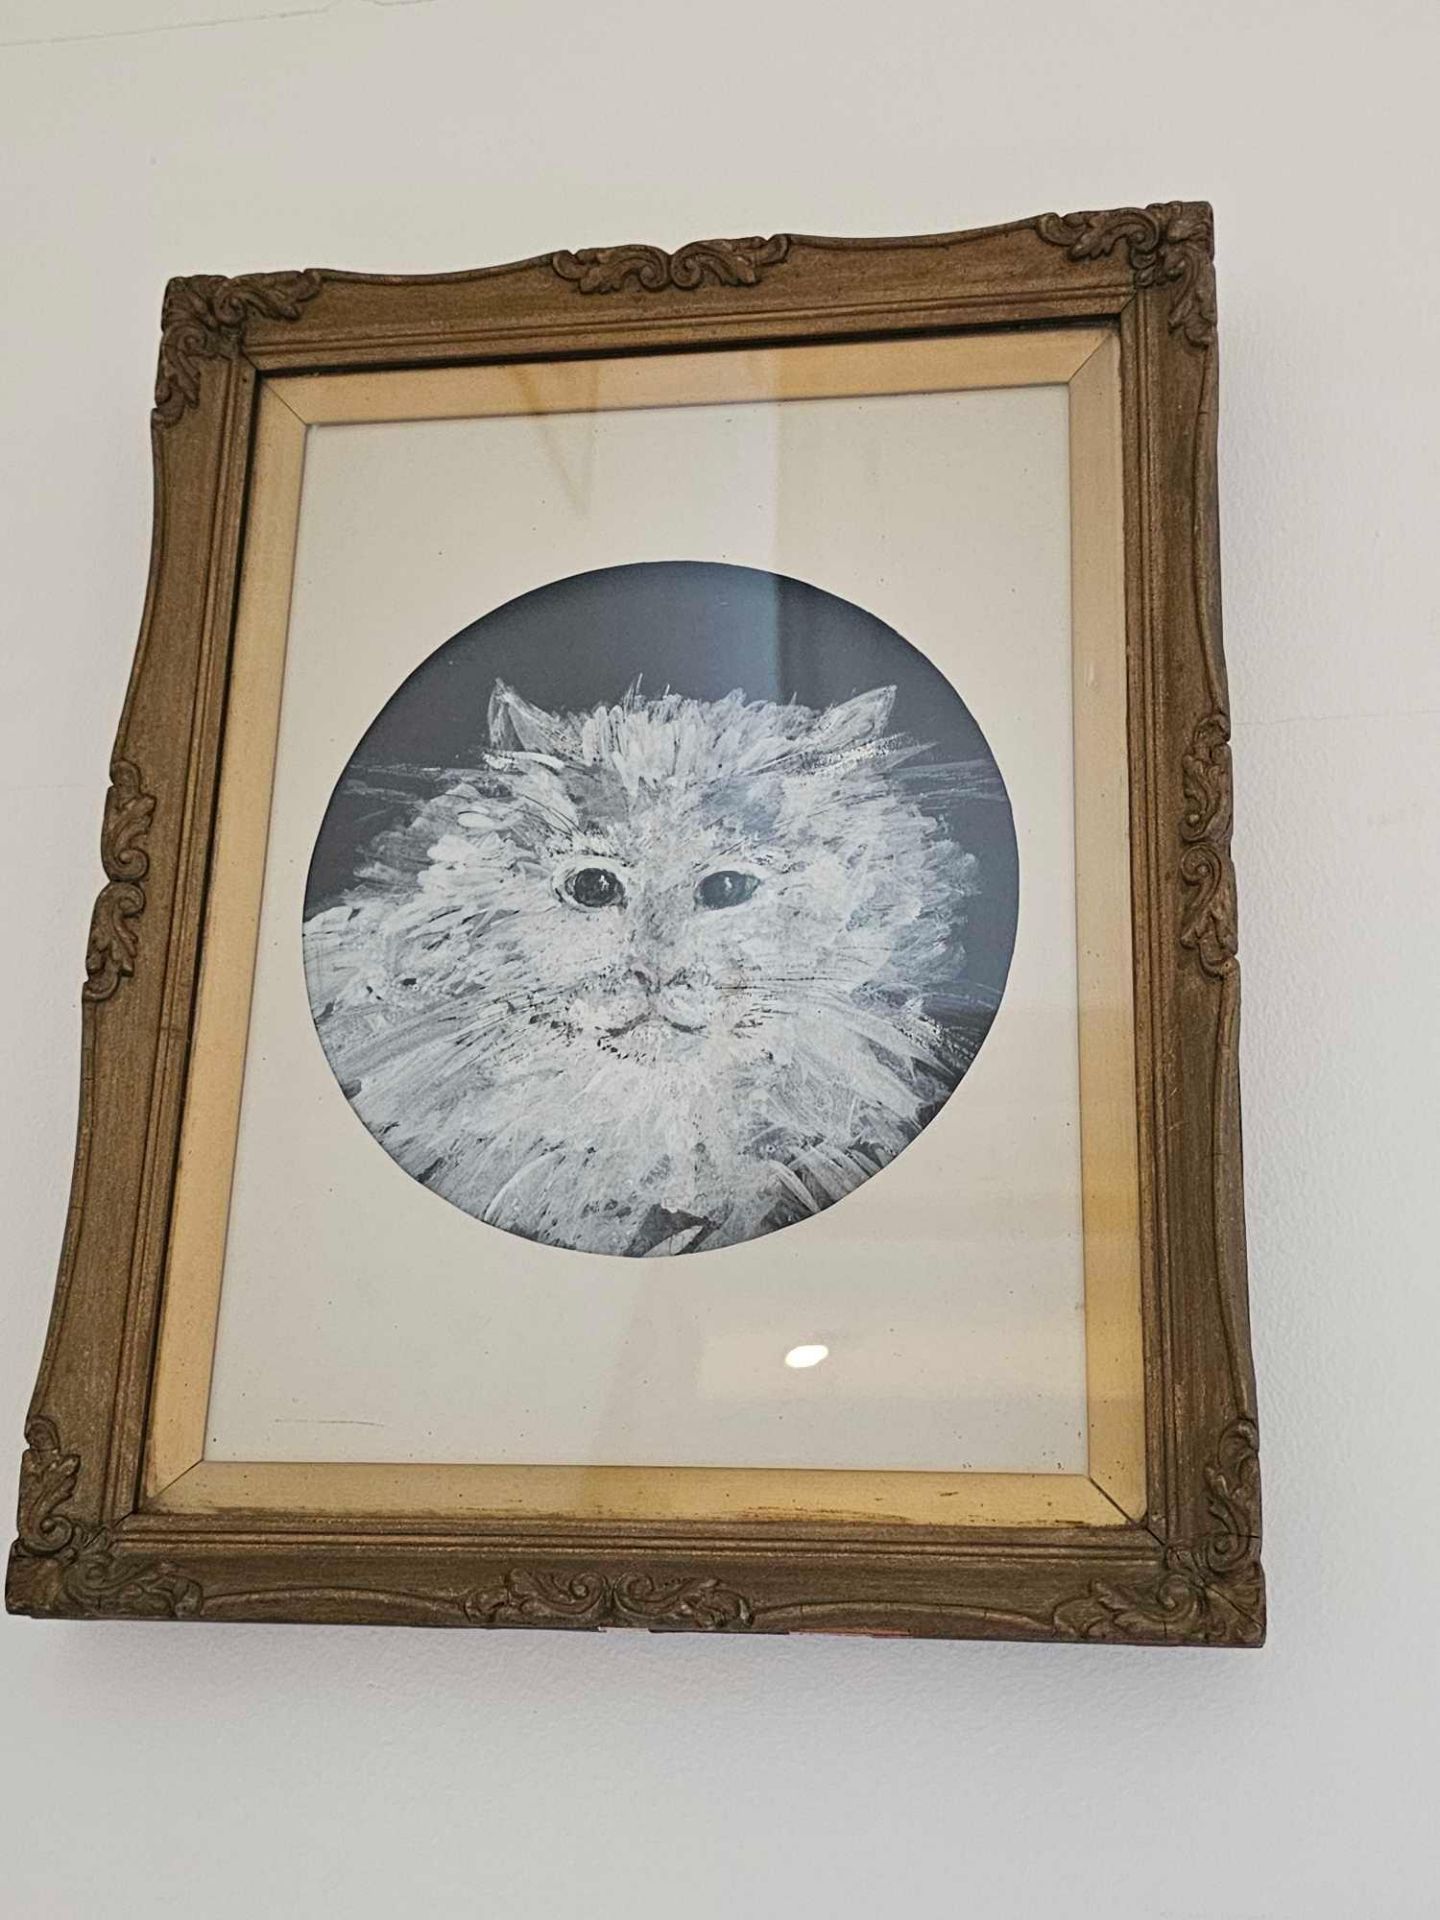 Framed Study Of A Cats Face Signed Artwork Joy Exley 1975 30 X 39cm